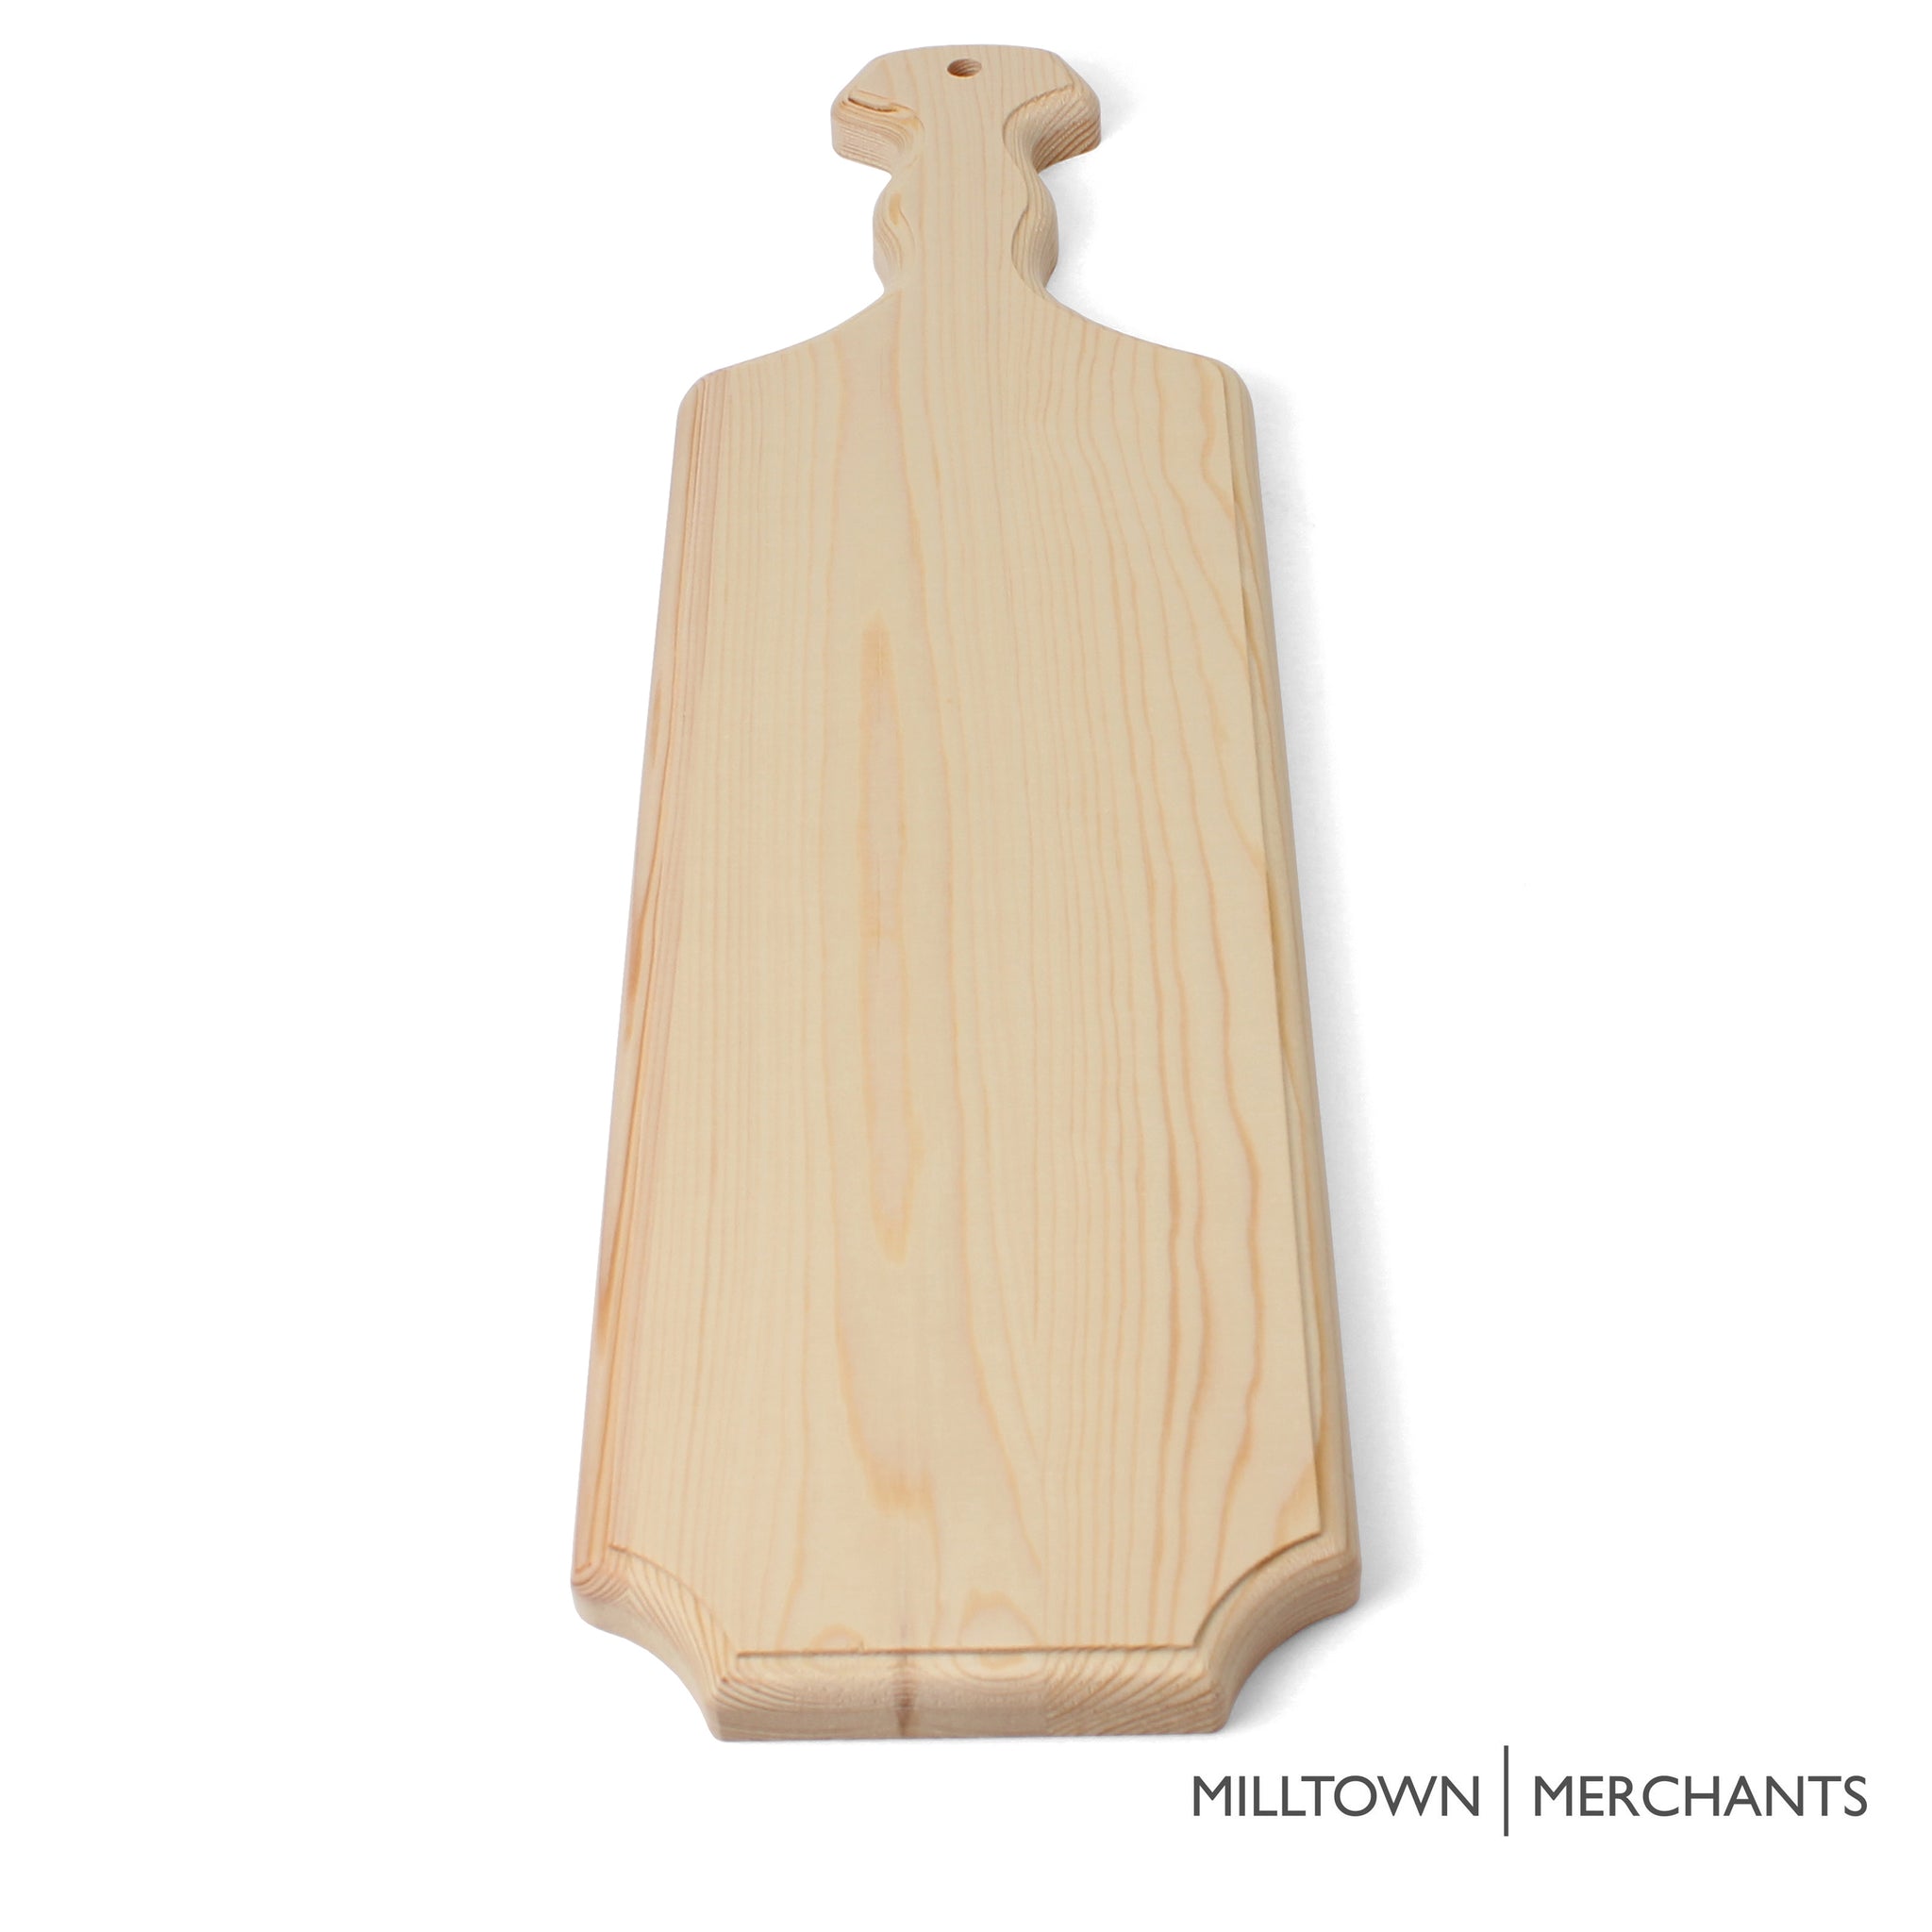 plain wooden paddles Wooden Paddle Wall Hangings Greek Sorority Paddles  Plain